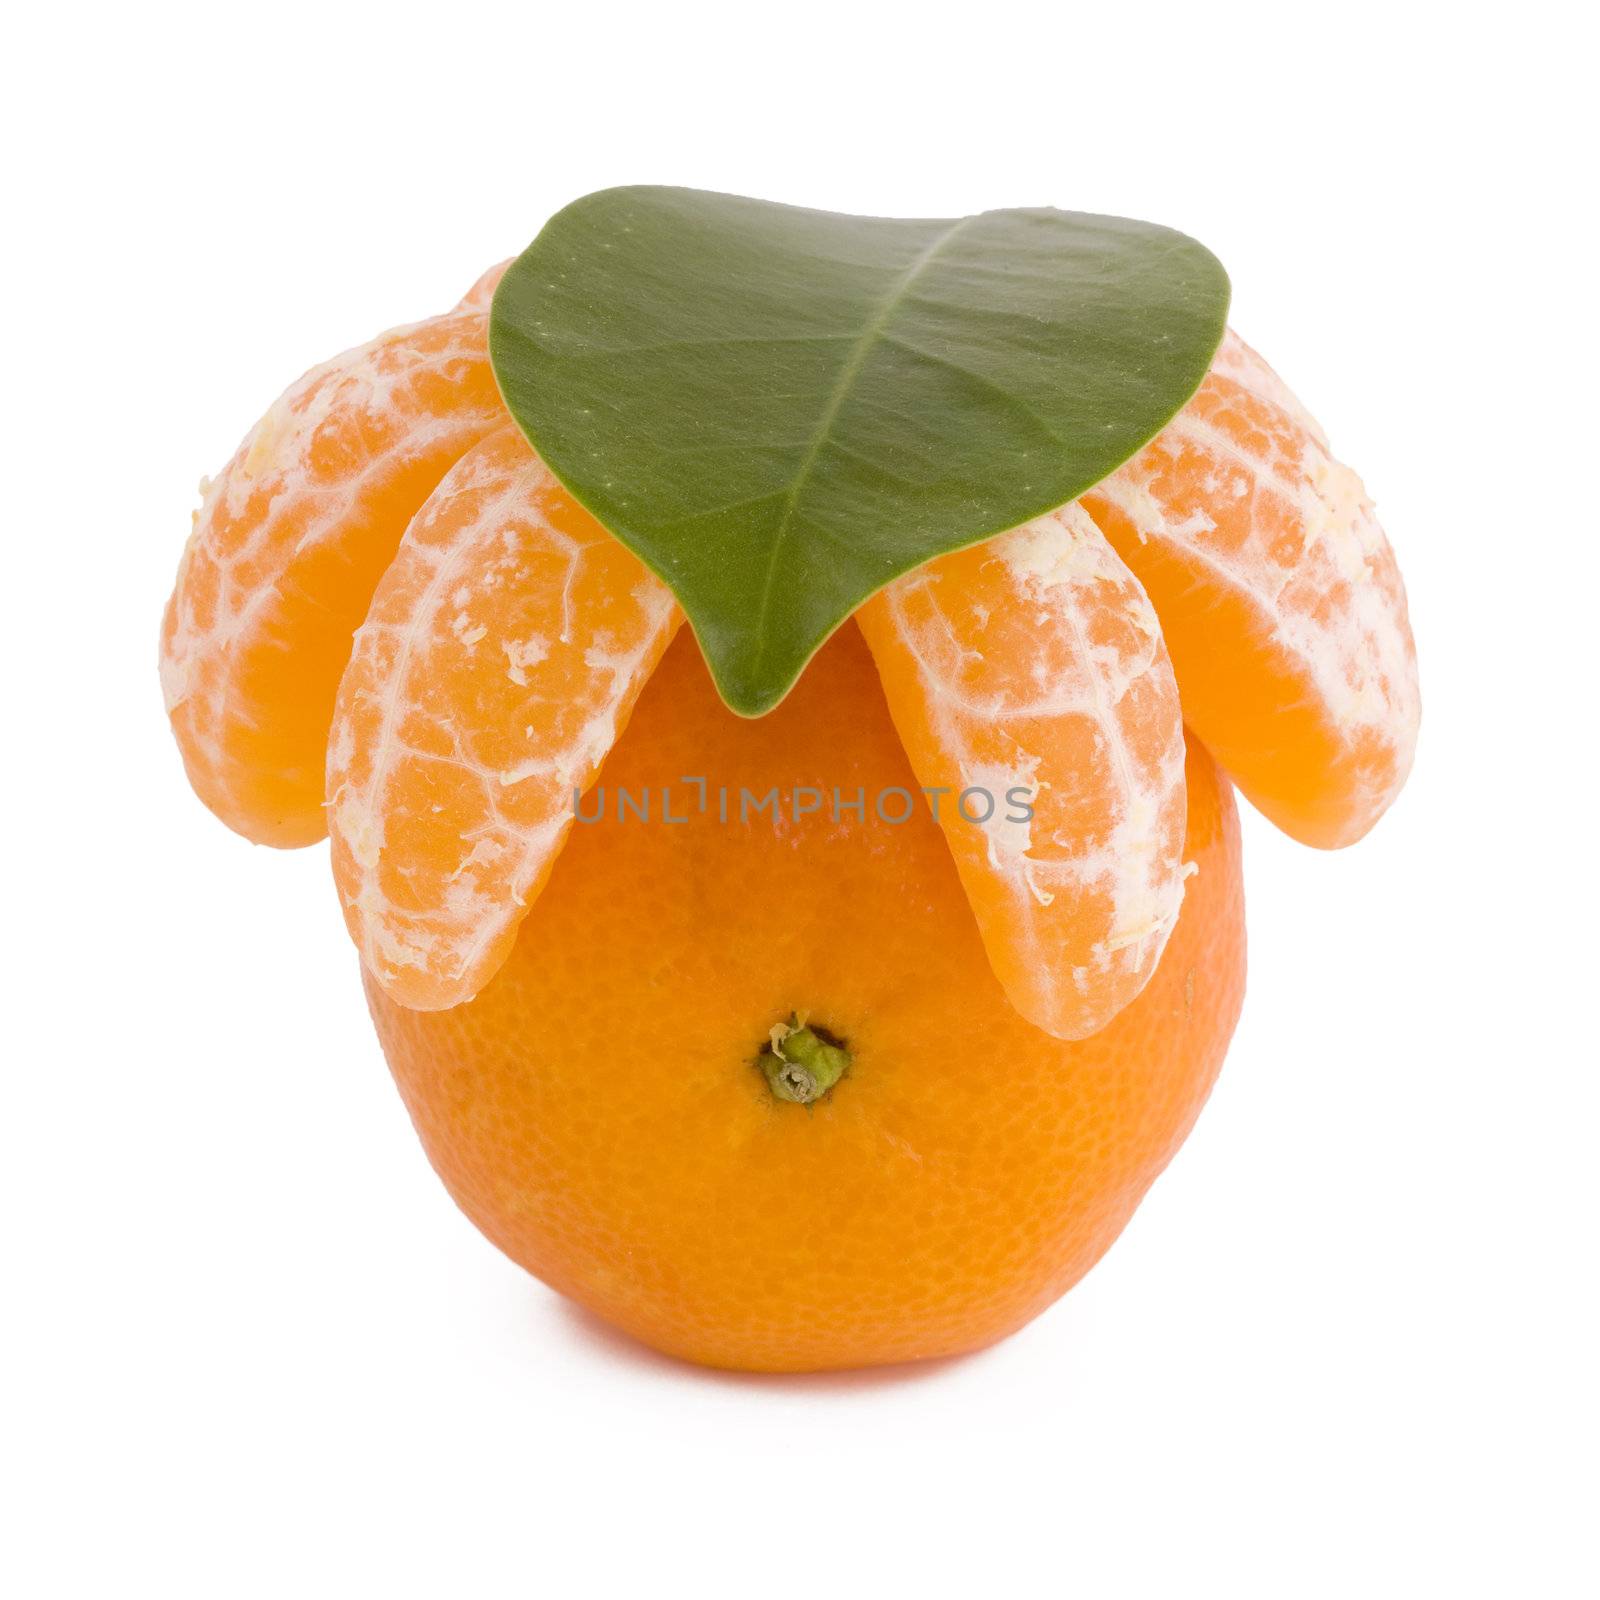 Tangerine with leaf by Gbuglok